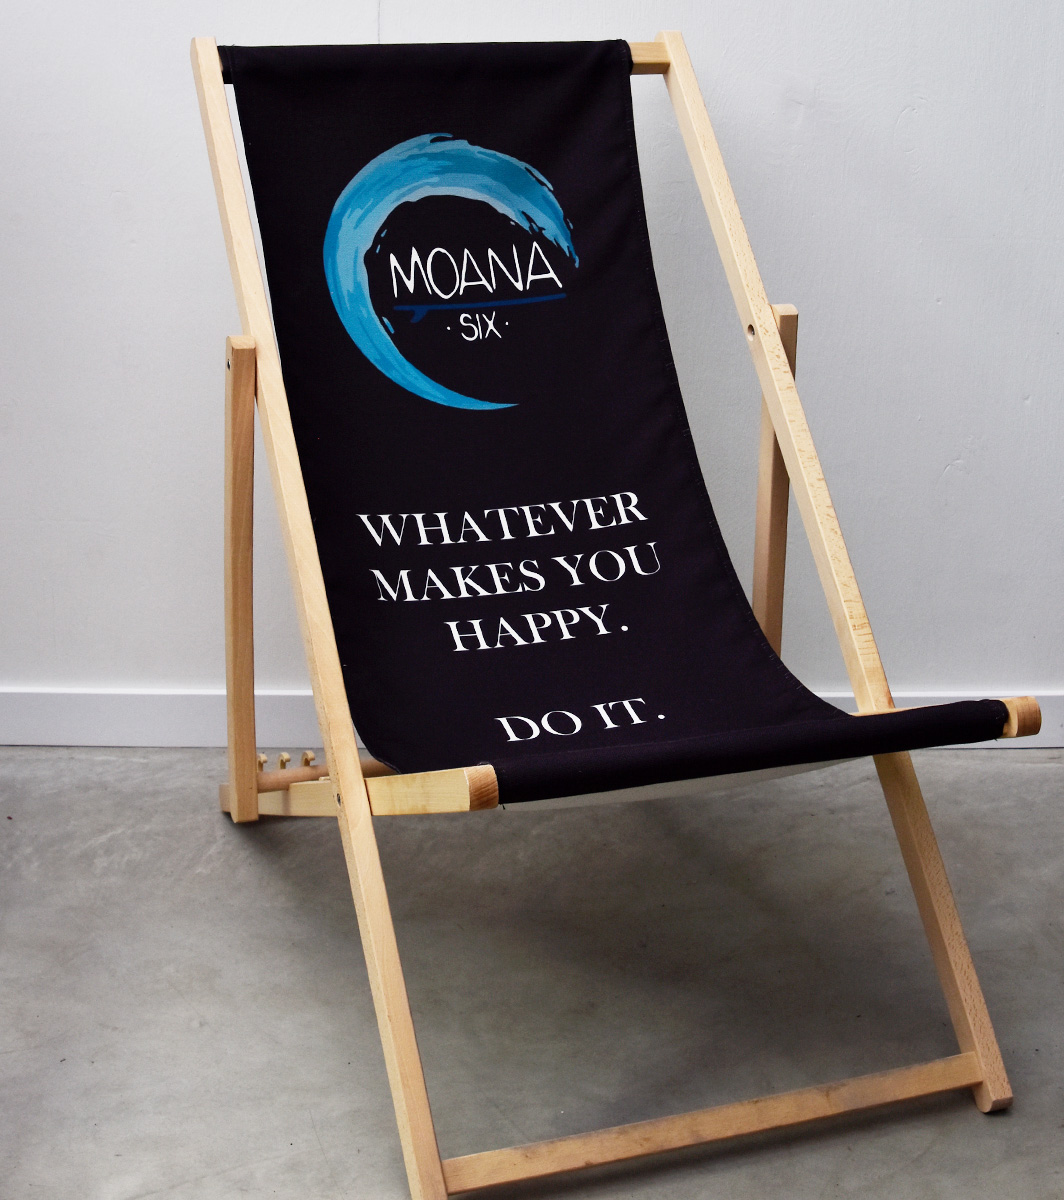 Moana Six beach chair | Makes you happy